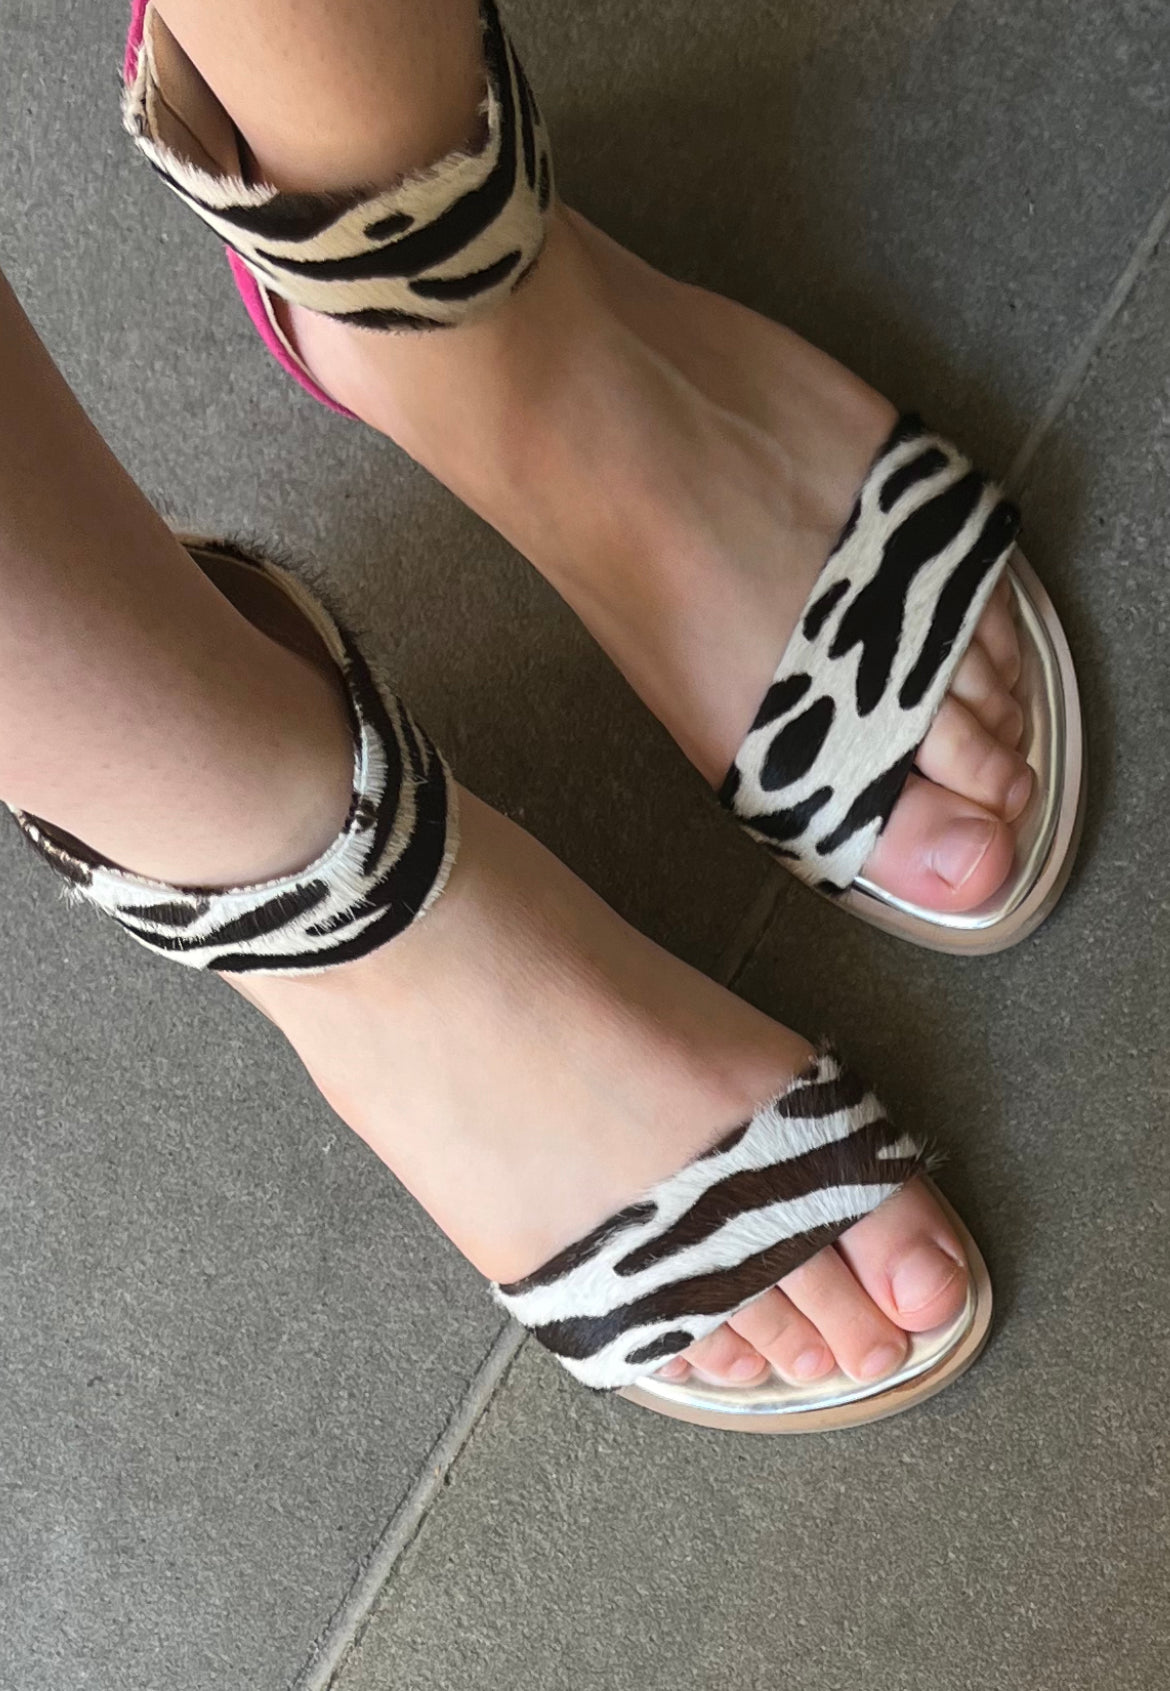 Marionette - Zebra flat sandal SIZE 35 AND 39!